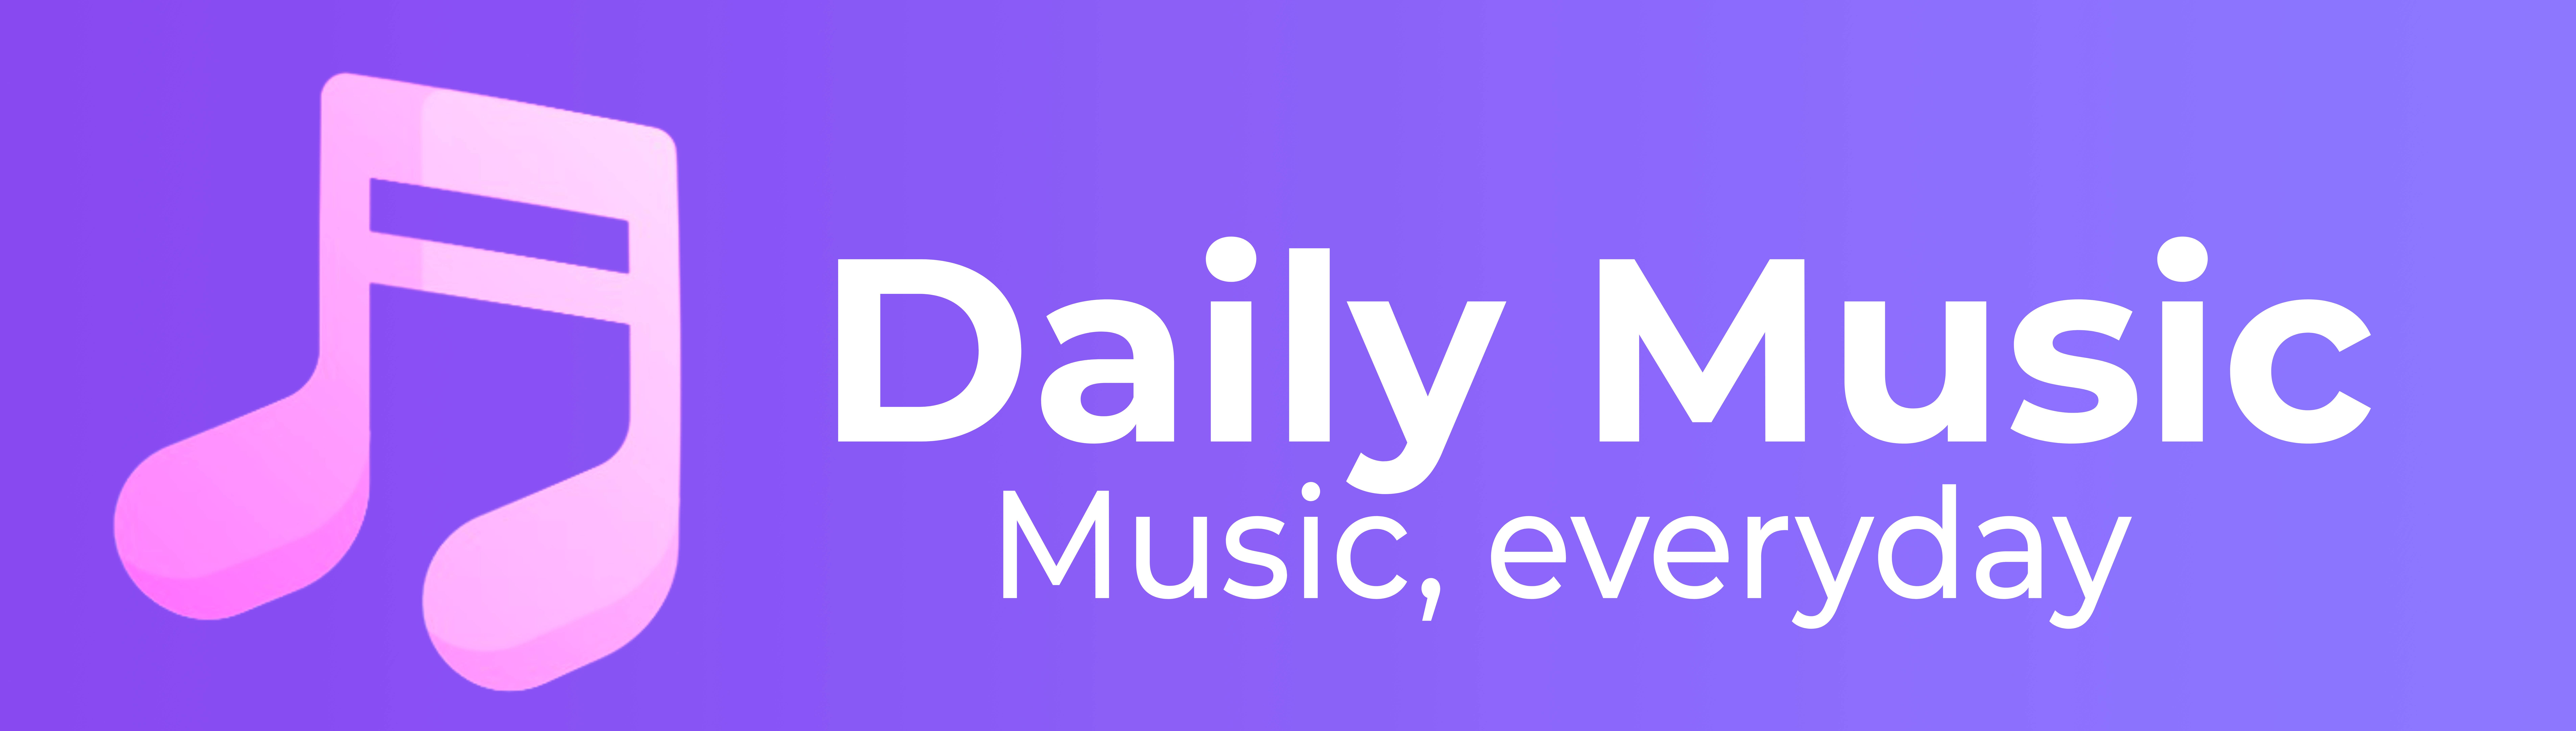 Daily Music - Music, everyday